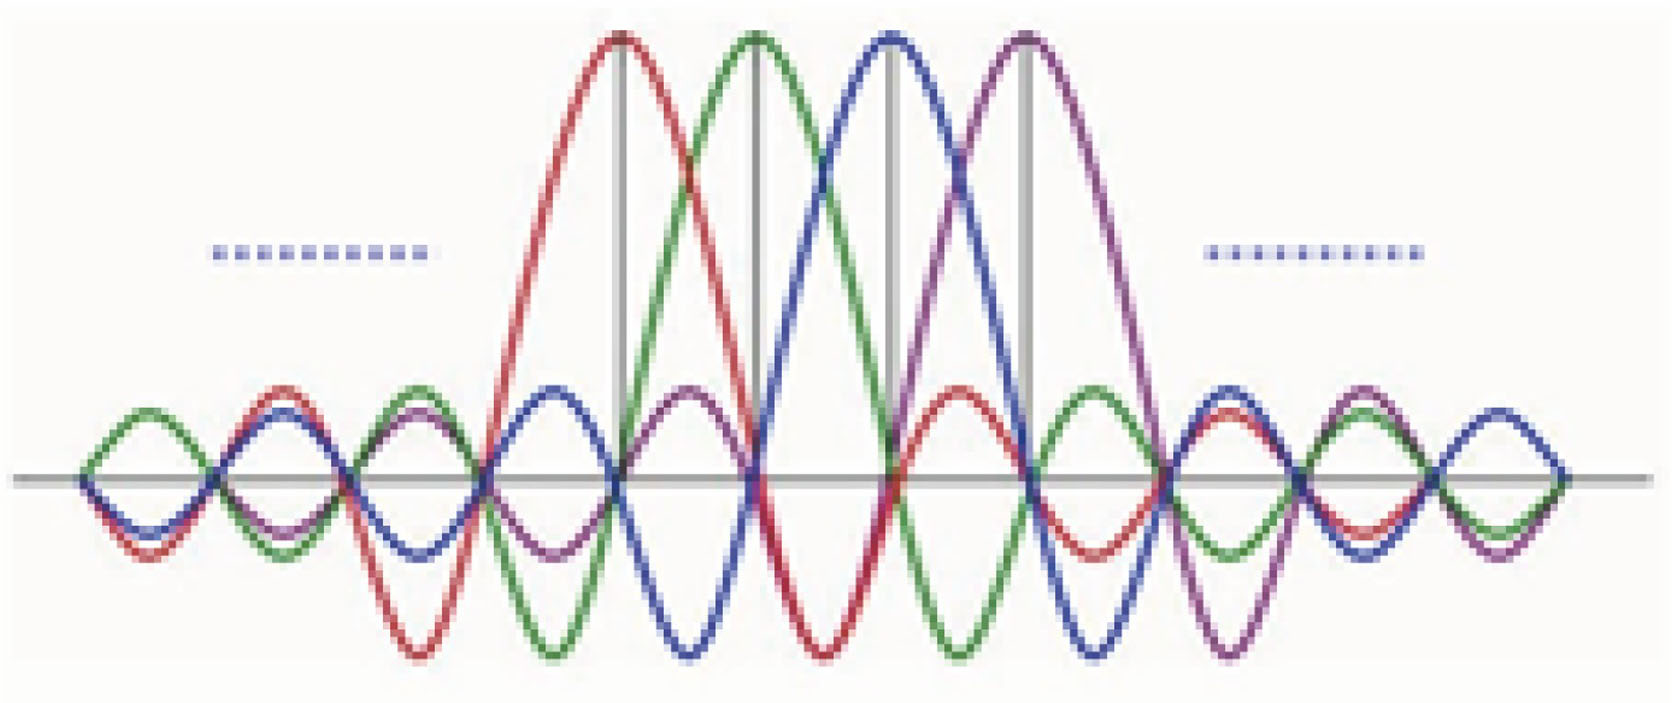 OFDM signal spectrum